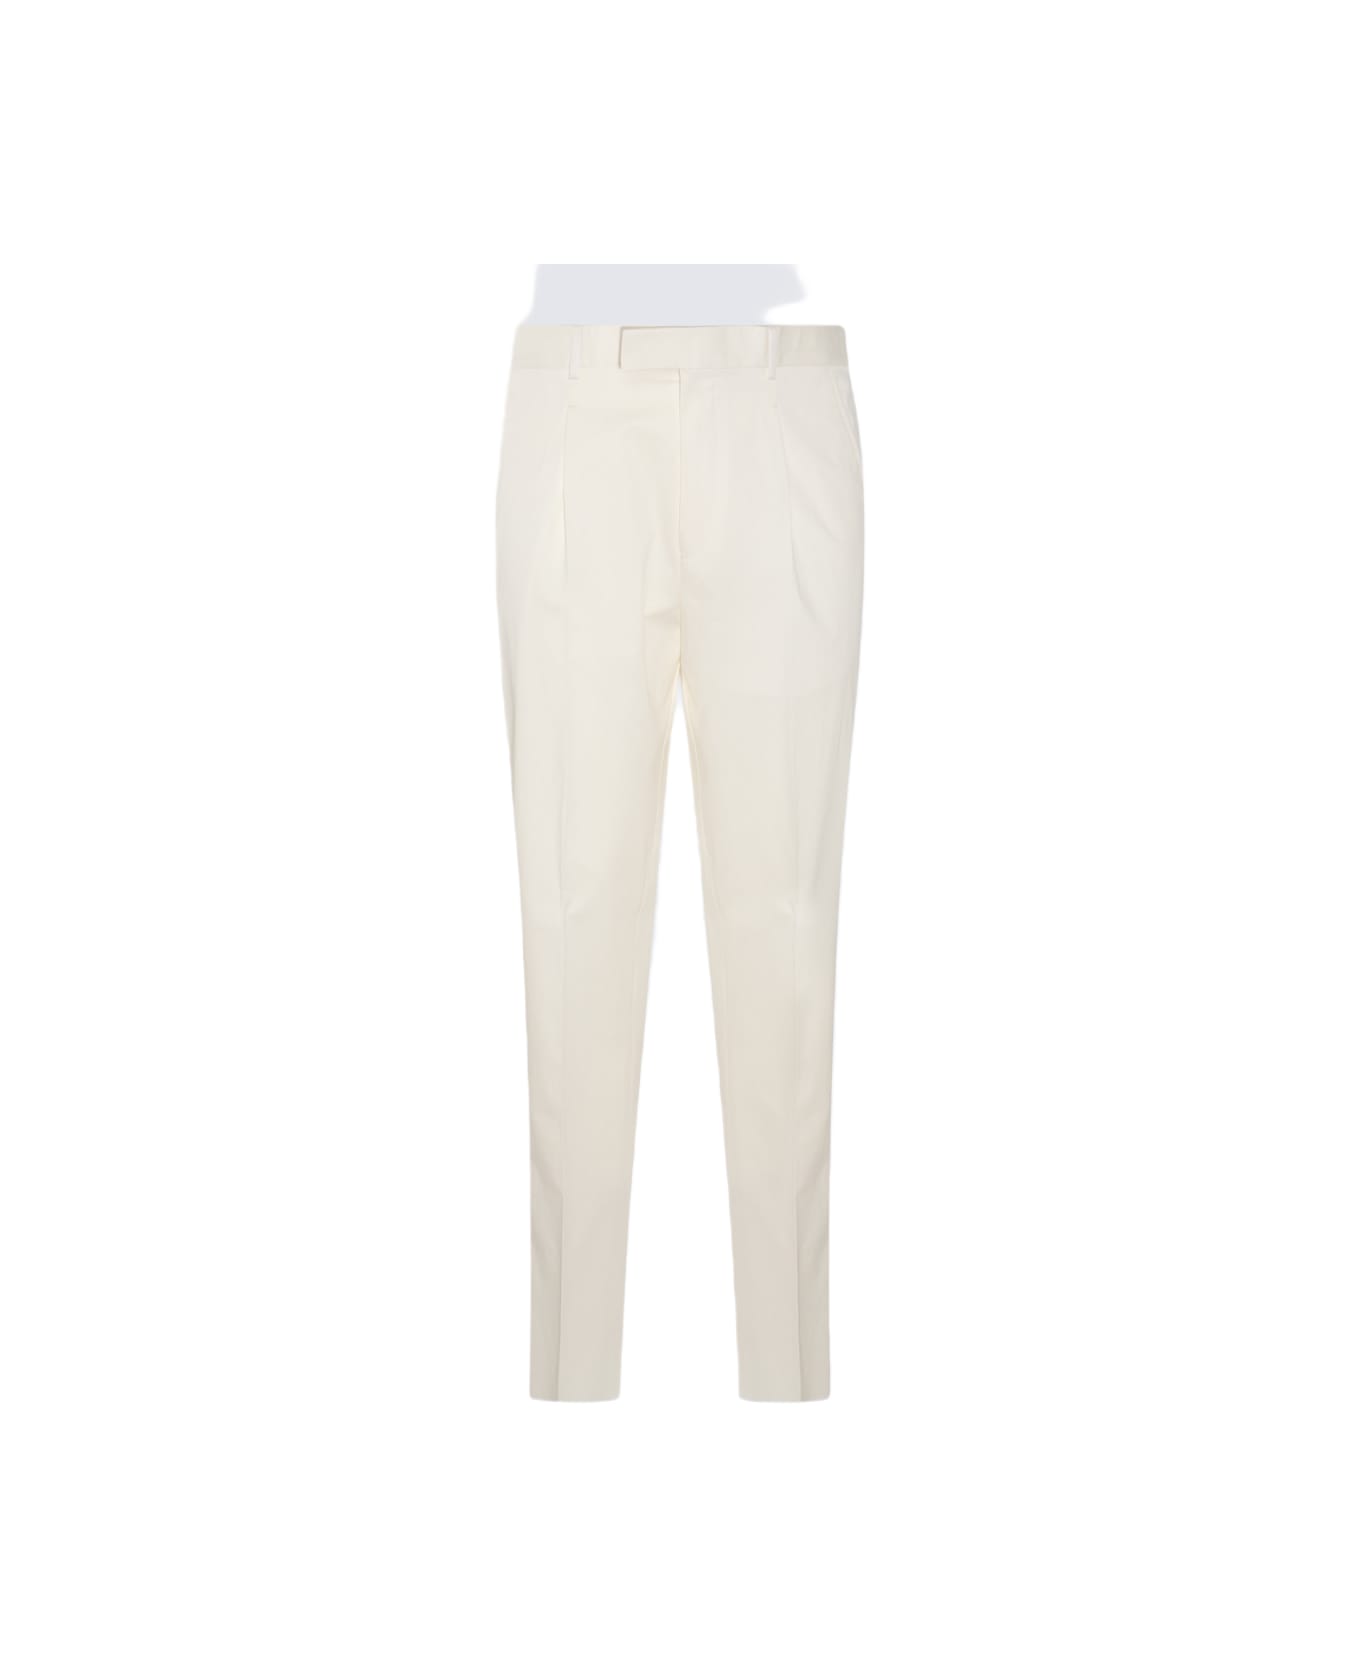 Zegna White Cotton Blend Trousers - White